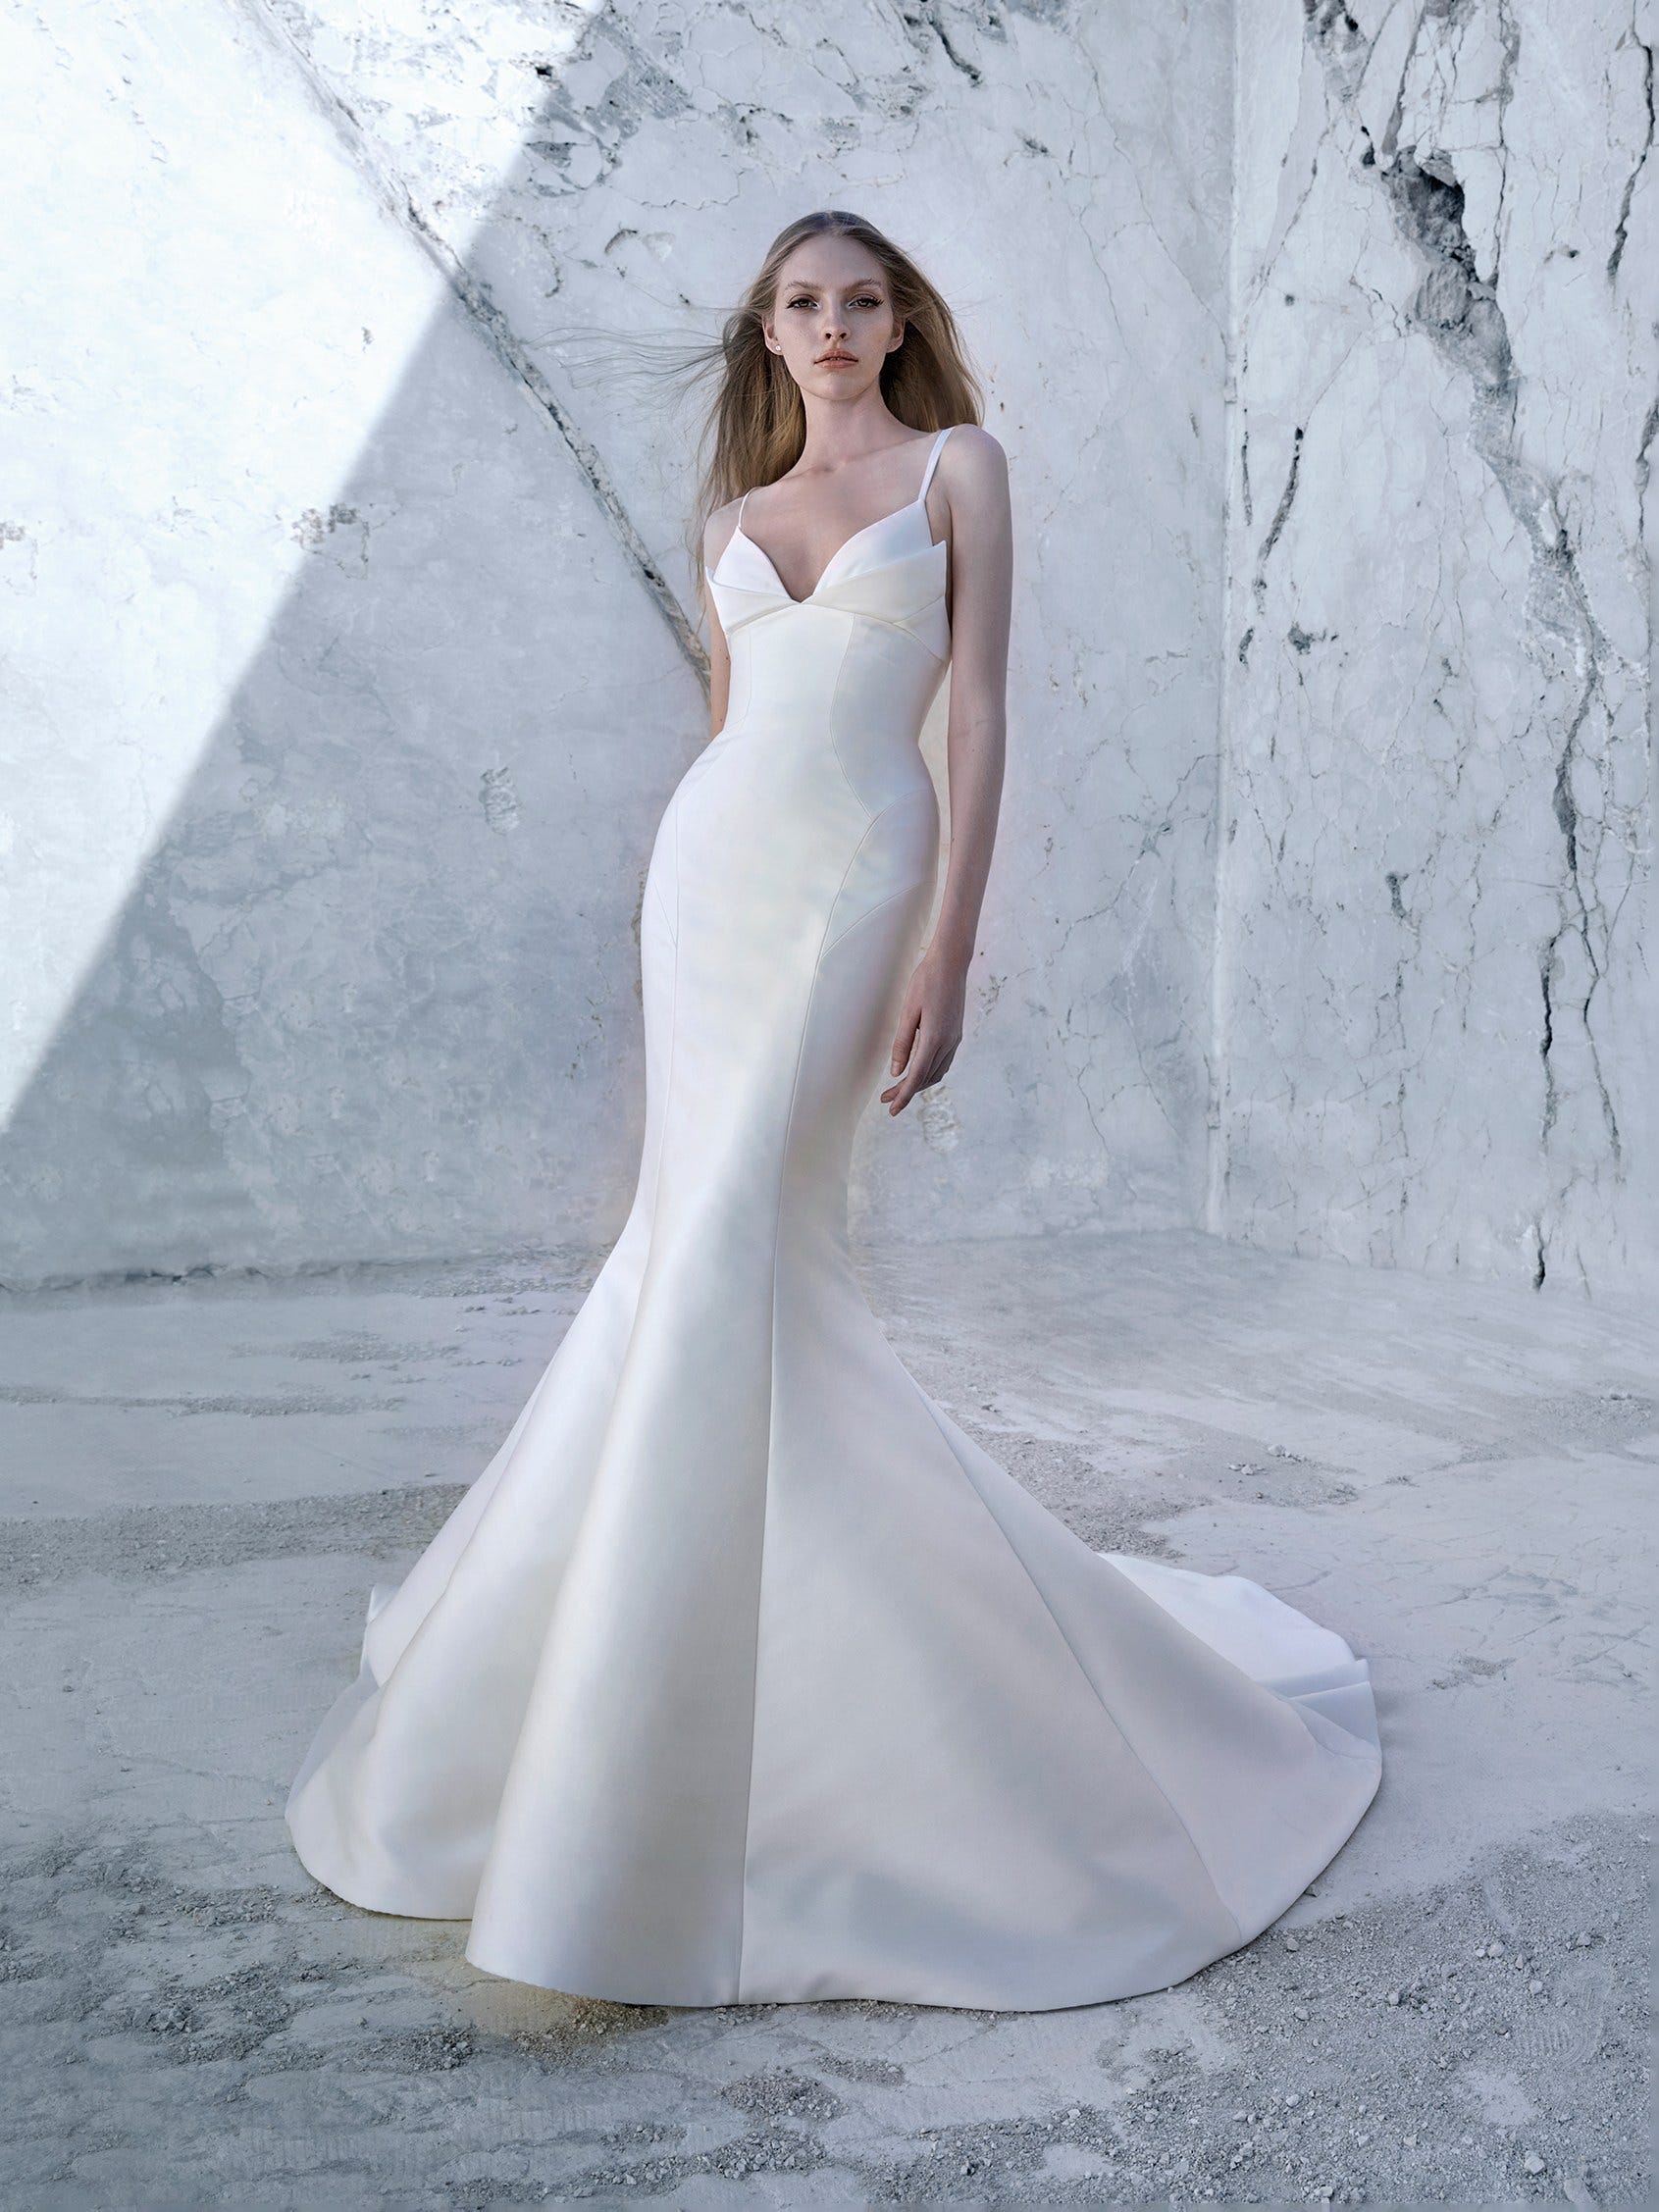 Winter Wedding Dresses: 18 Impeccable Ideas  Blue winter wedding, Winter  wedding dress, Winter wedding gowns